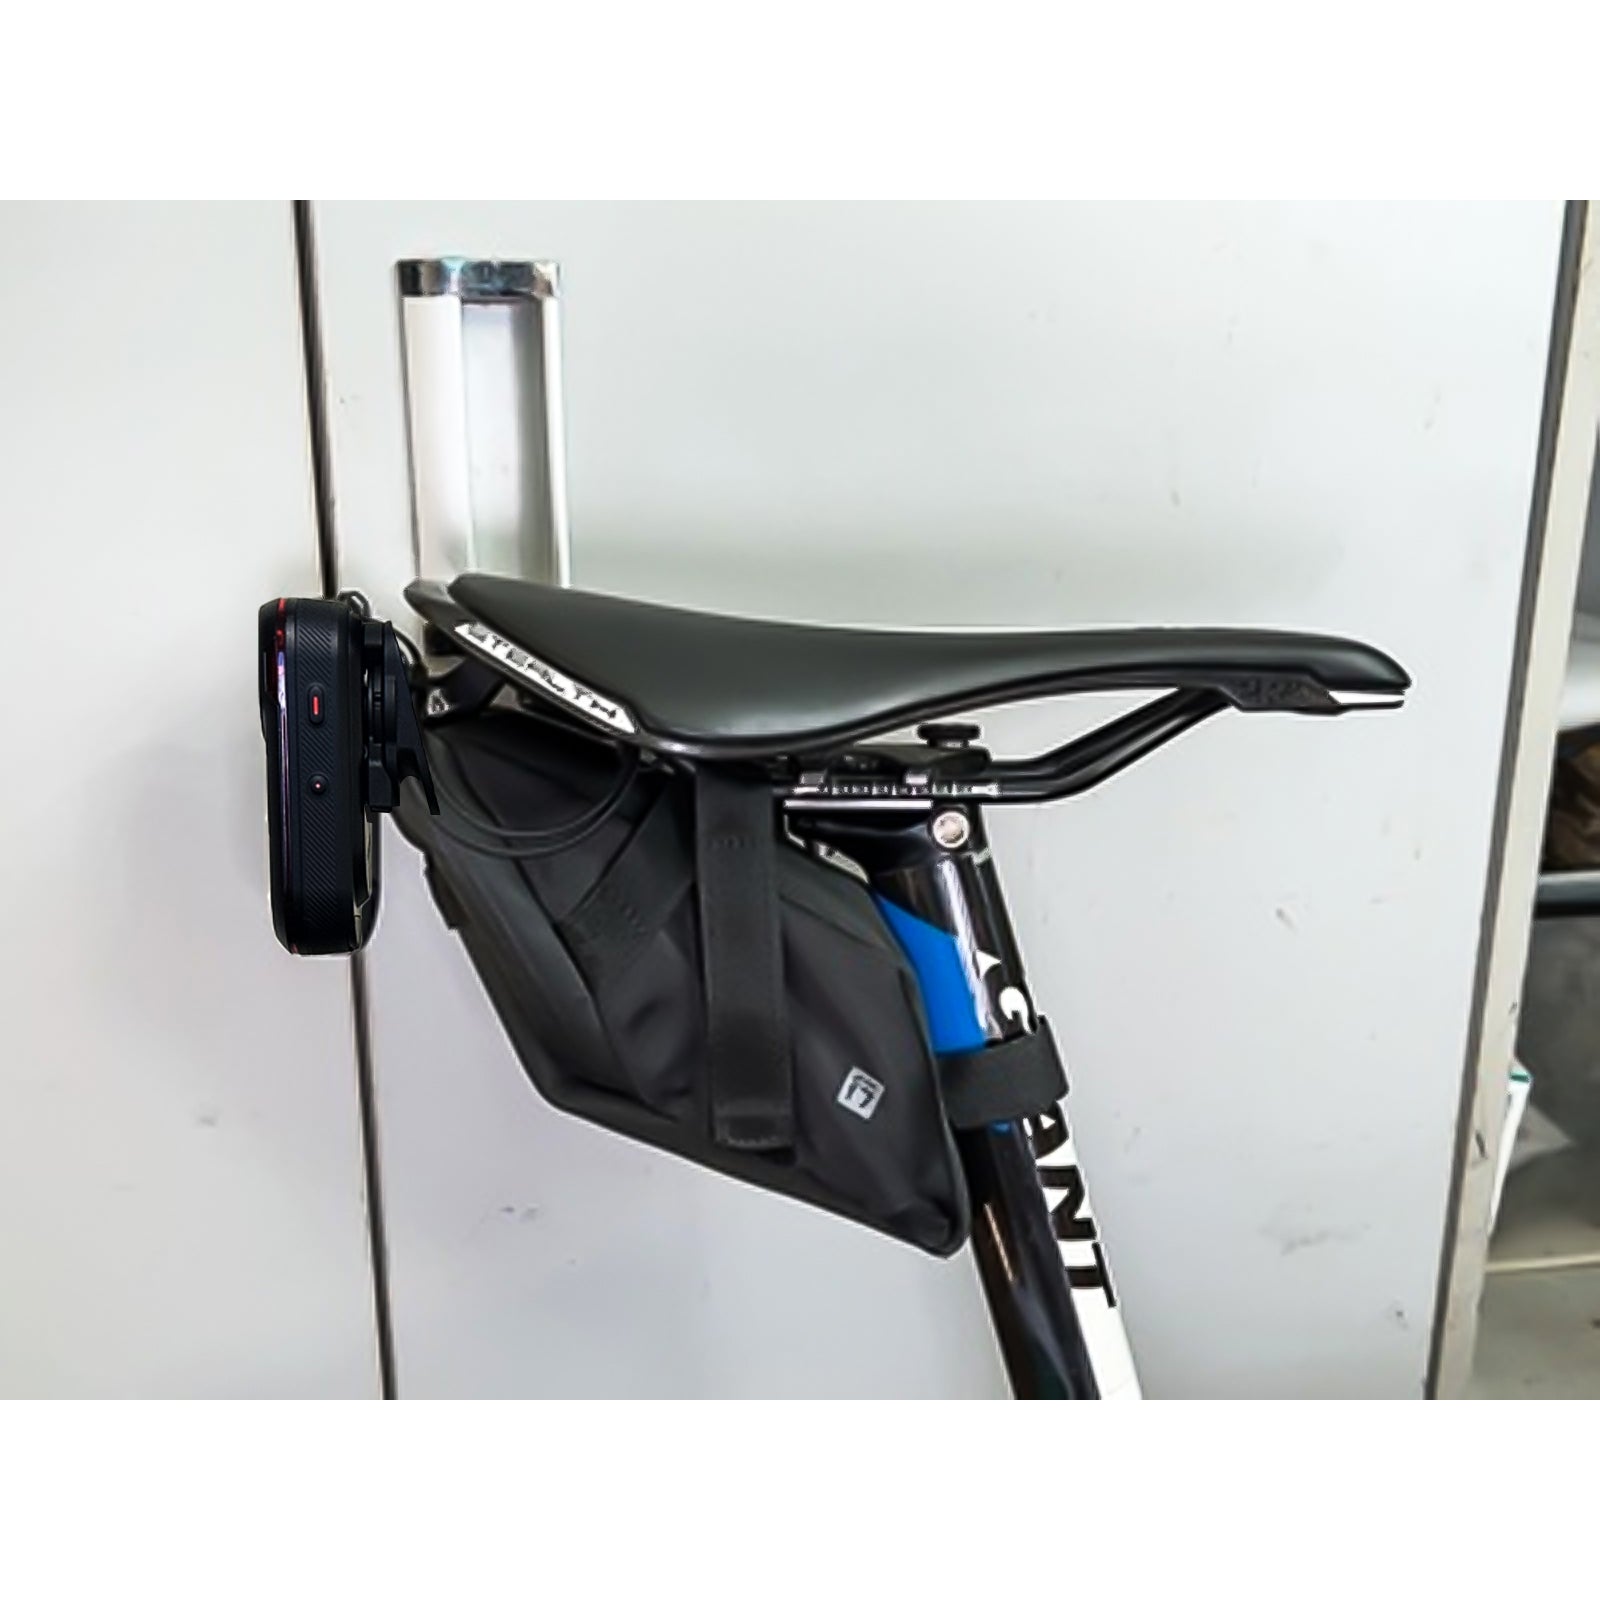  Xotic Tech Saddle Clamp Radar Bike Mount Compatible with Garmin  Varia RCT715 Tail Light : Electronics